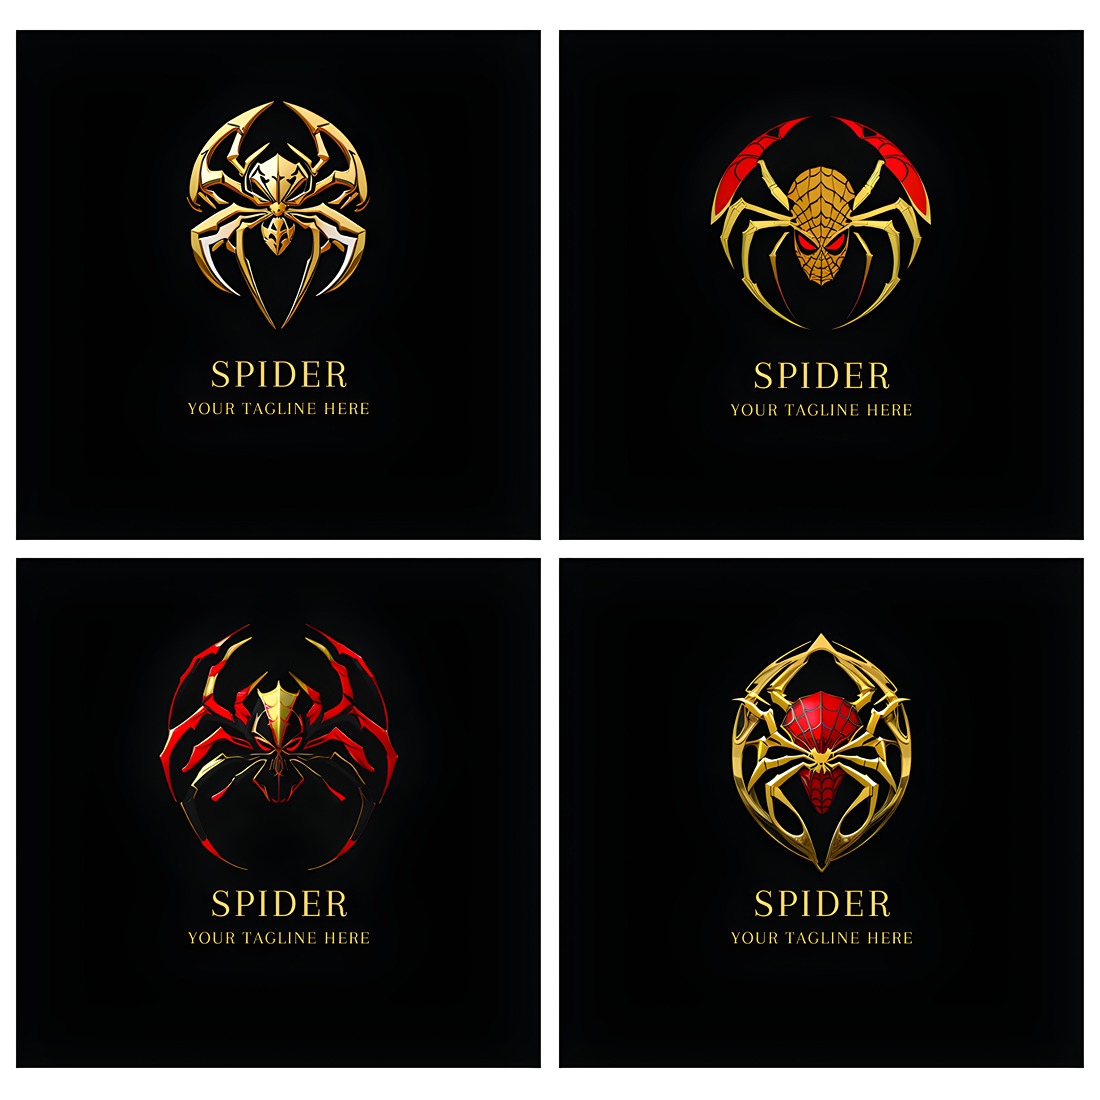 spider logo 04 copy 11zon 171